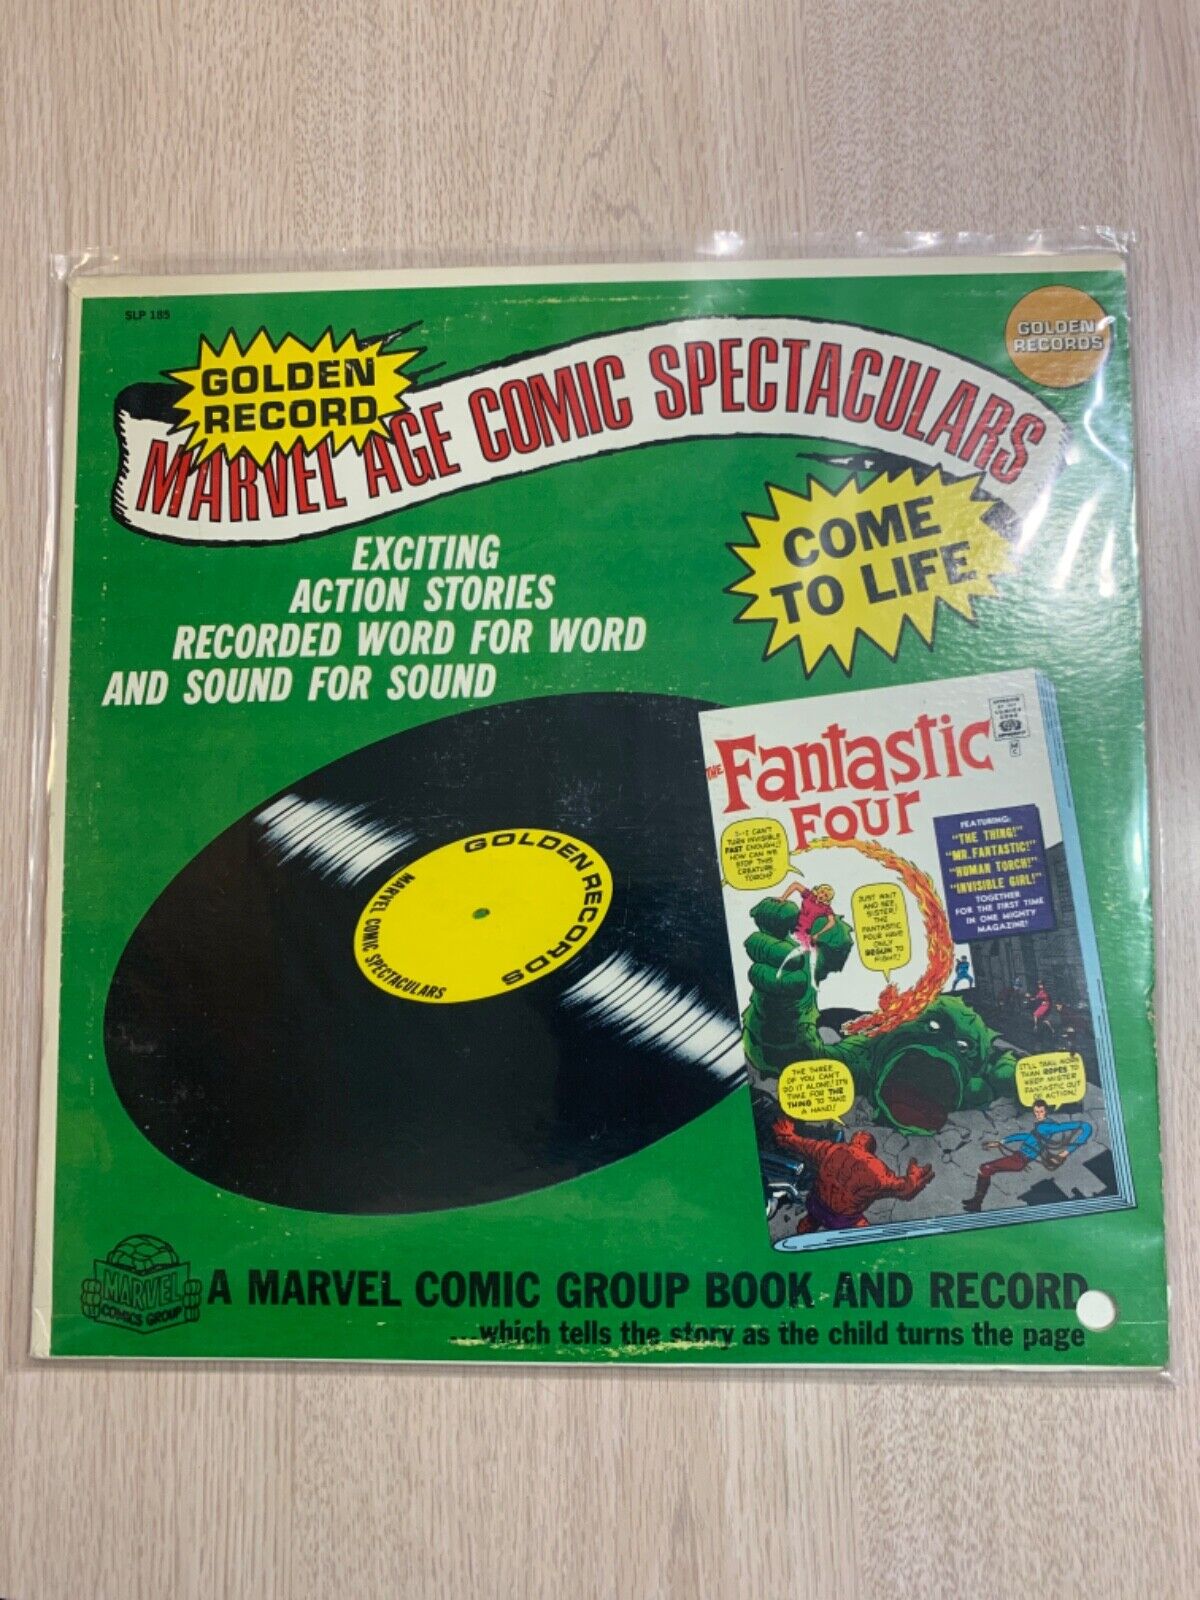 RARE FANTASTIC FOUR 1966 GOLDEN RECORD MARVEL AGE COMIC SPECTACULAR VINYL  MMMS